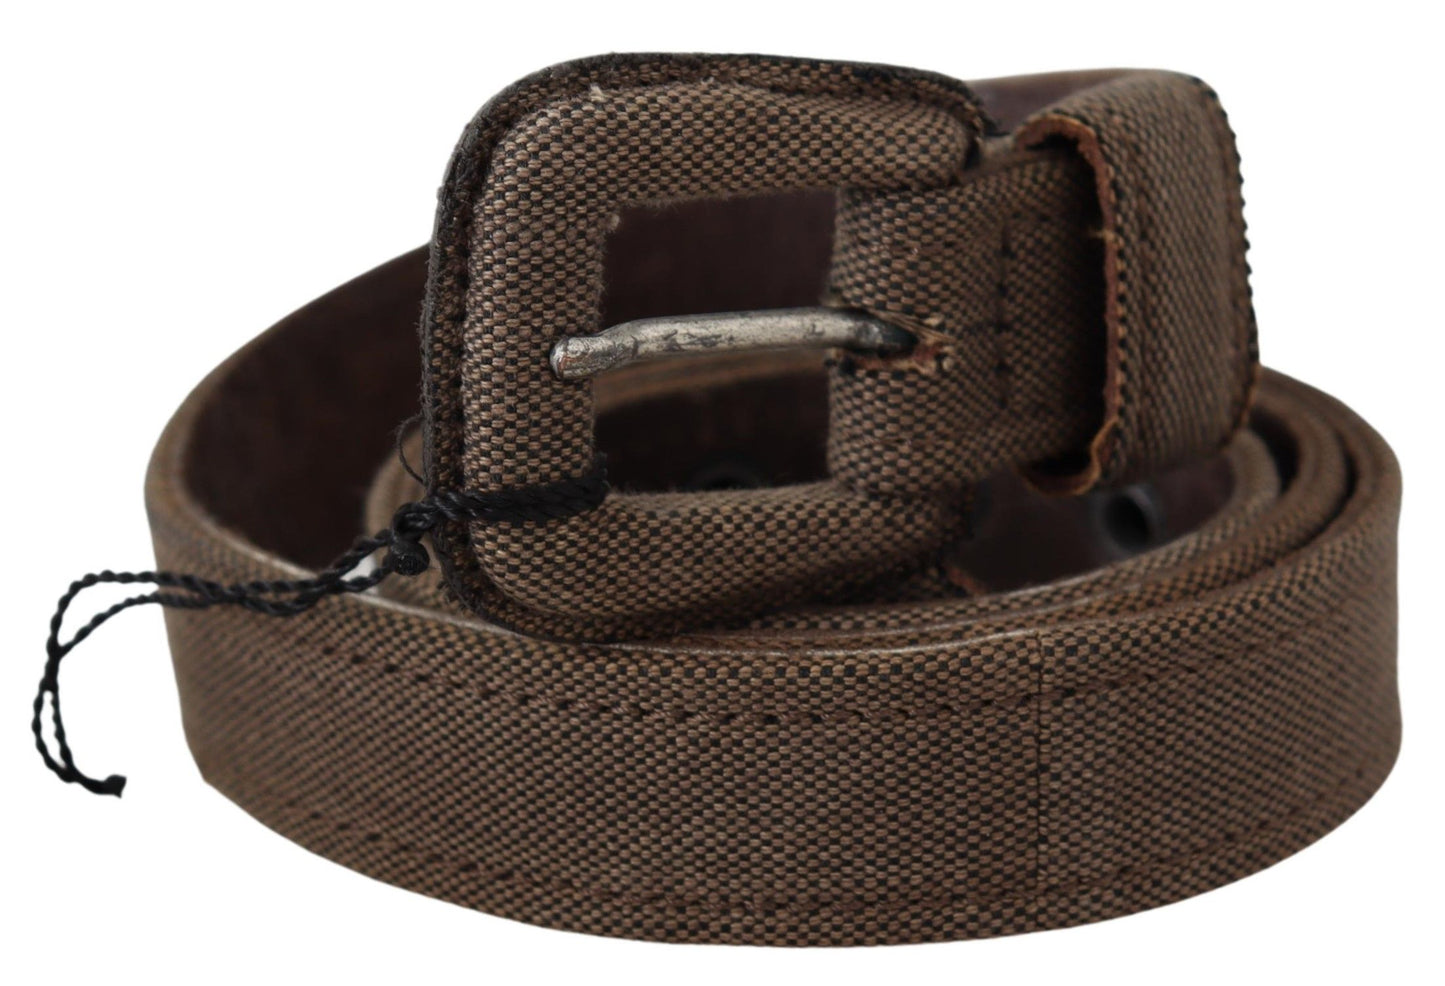 Elegant Brown Leather Waist Belt